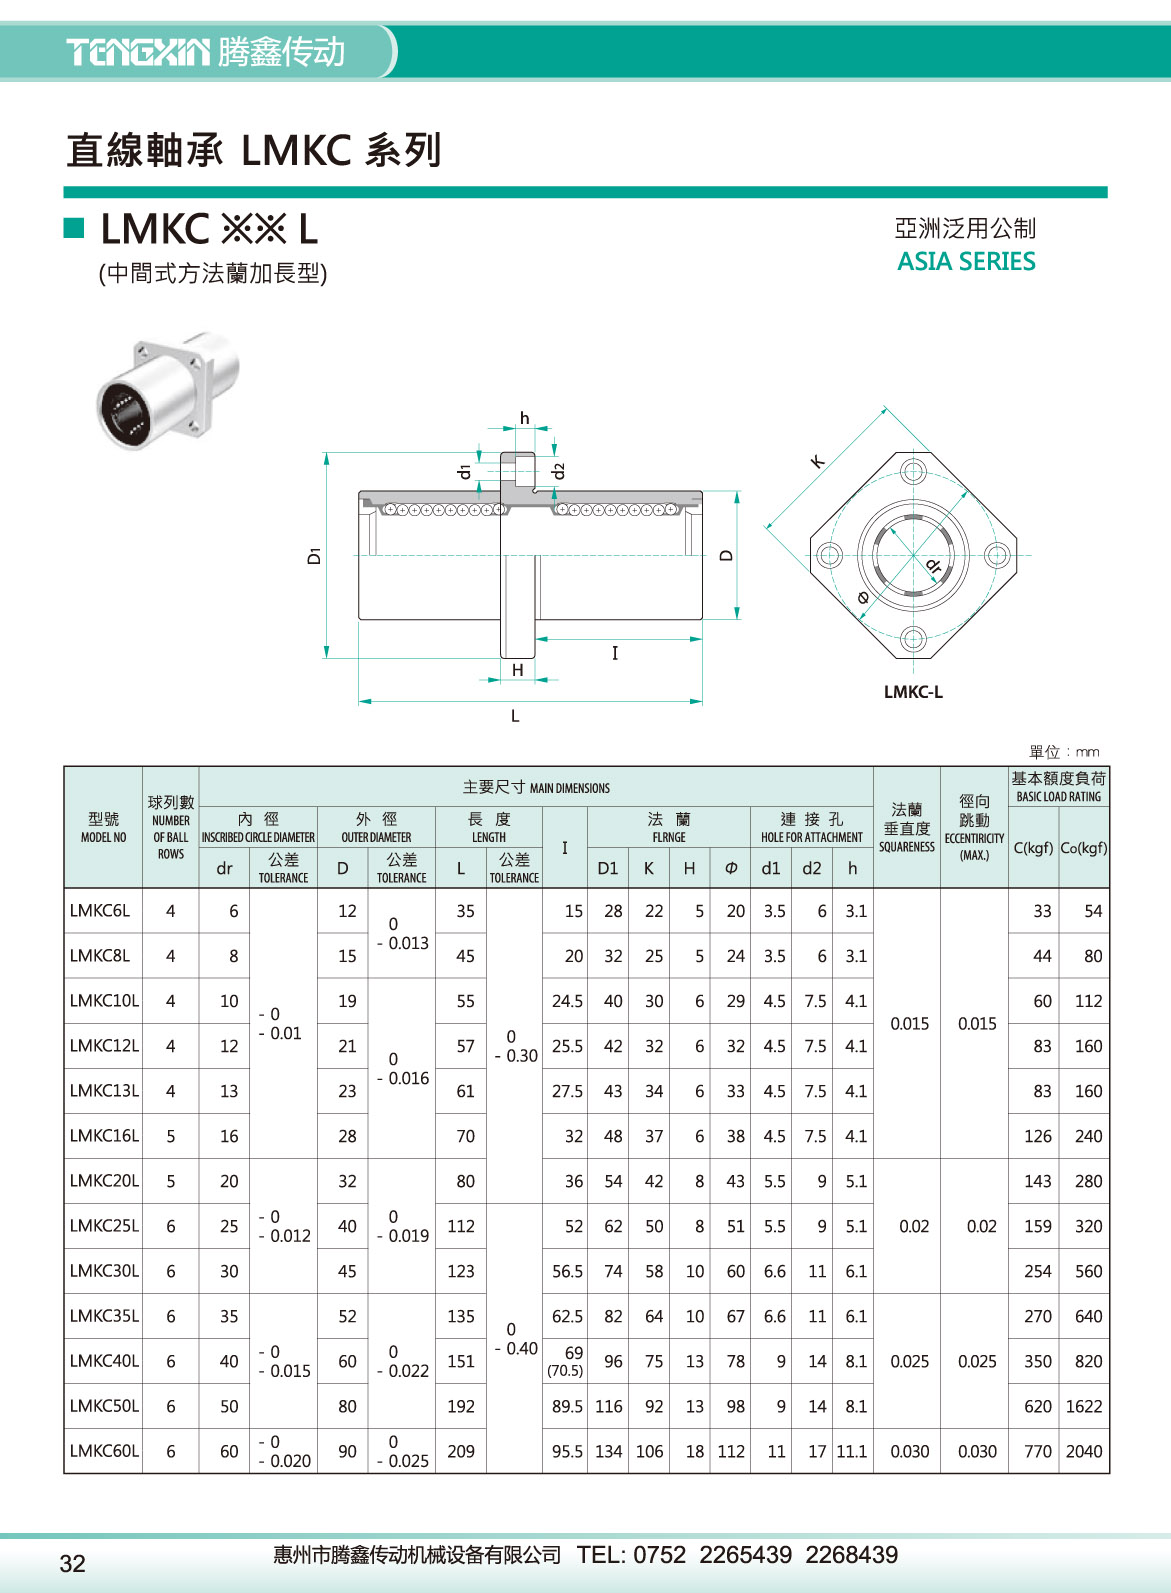 LMKC_L 中间式方法兰加长型.jpg